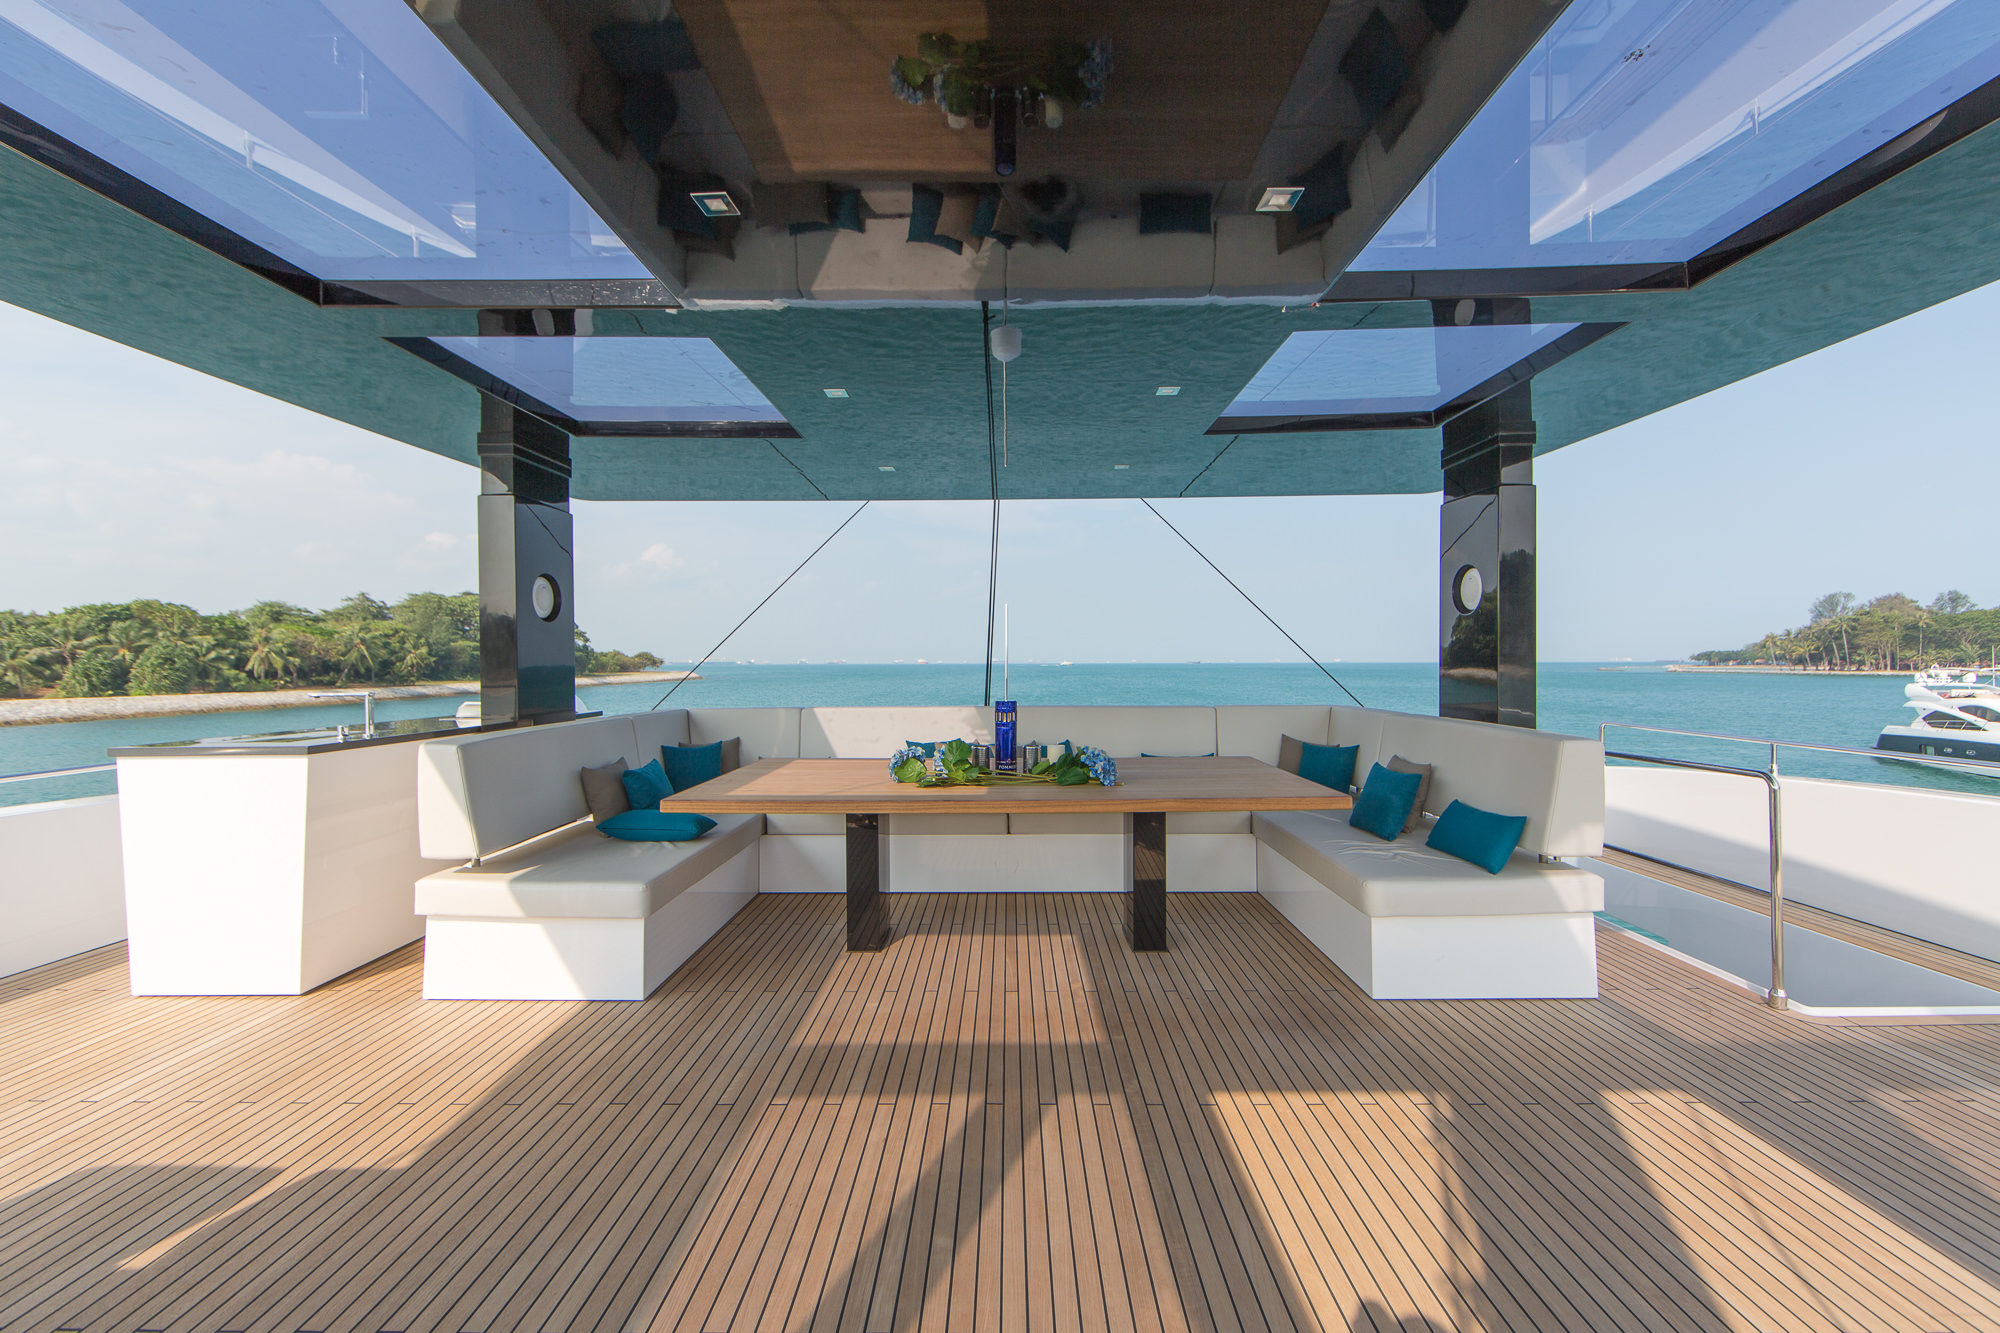 Sunreef Supreme 68 luxury catamaran Layout